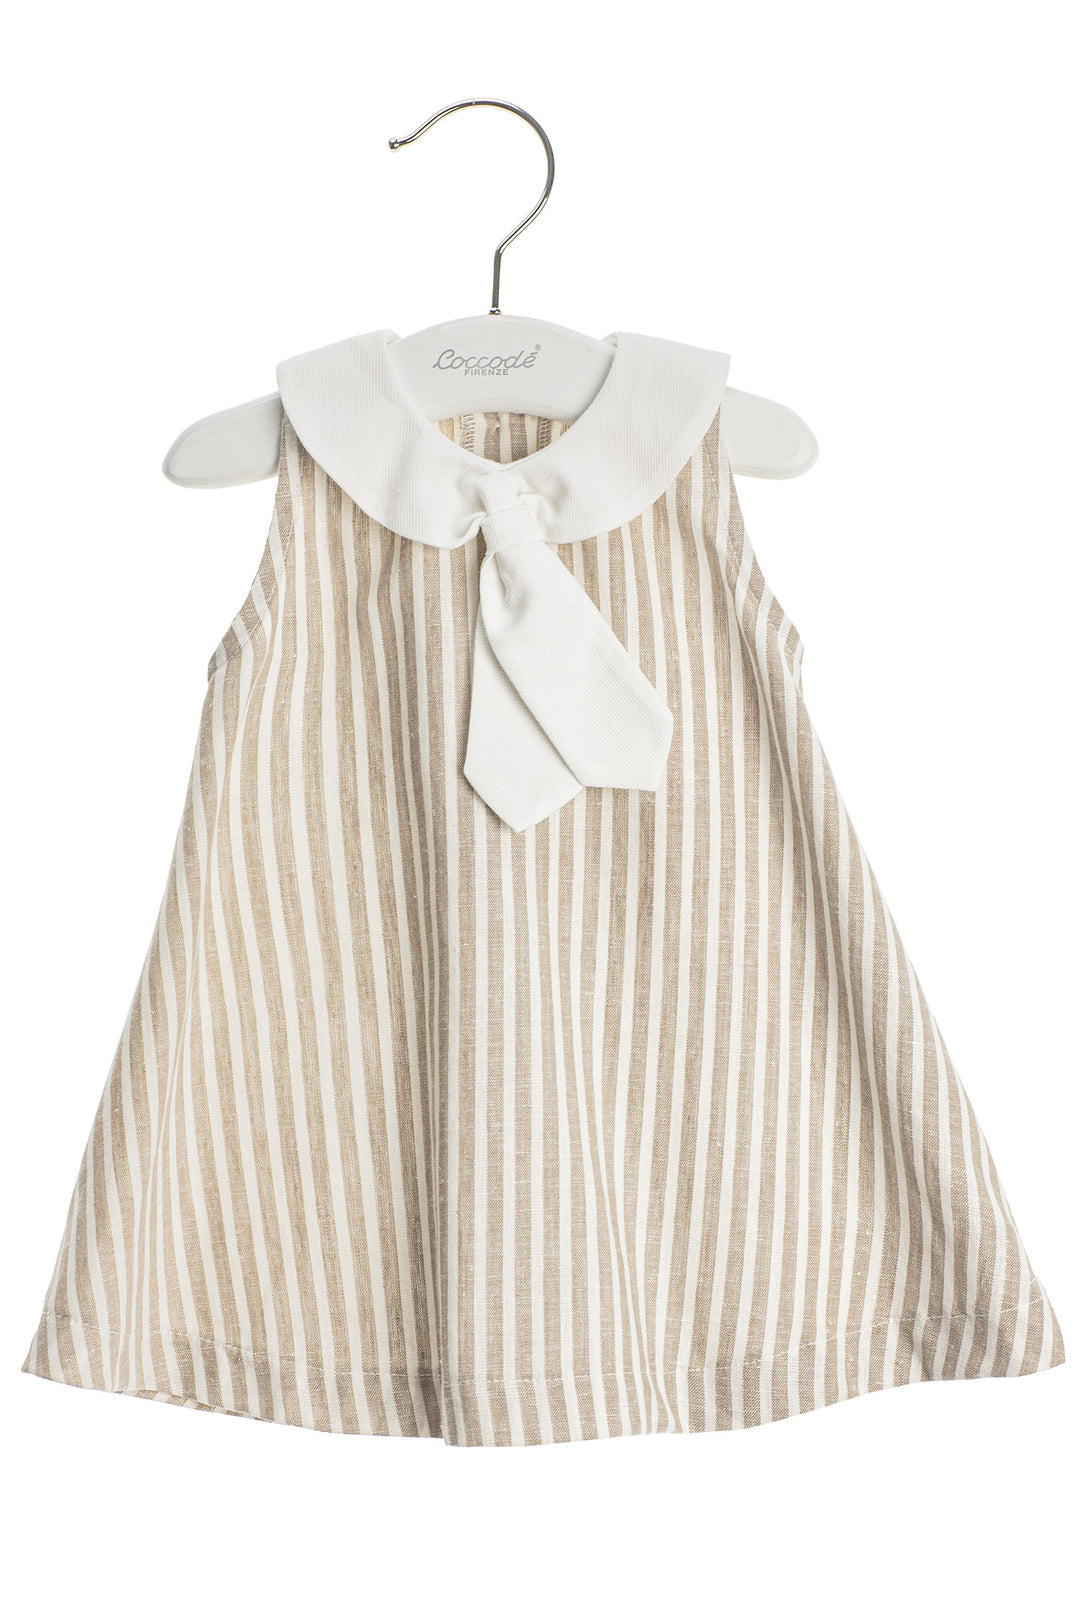 Coccodè "Scarlet" Linen Stripe Sailor Dress | Millie and John